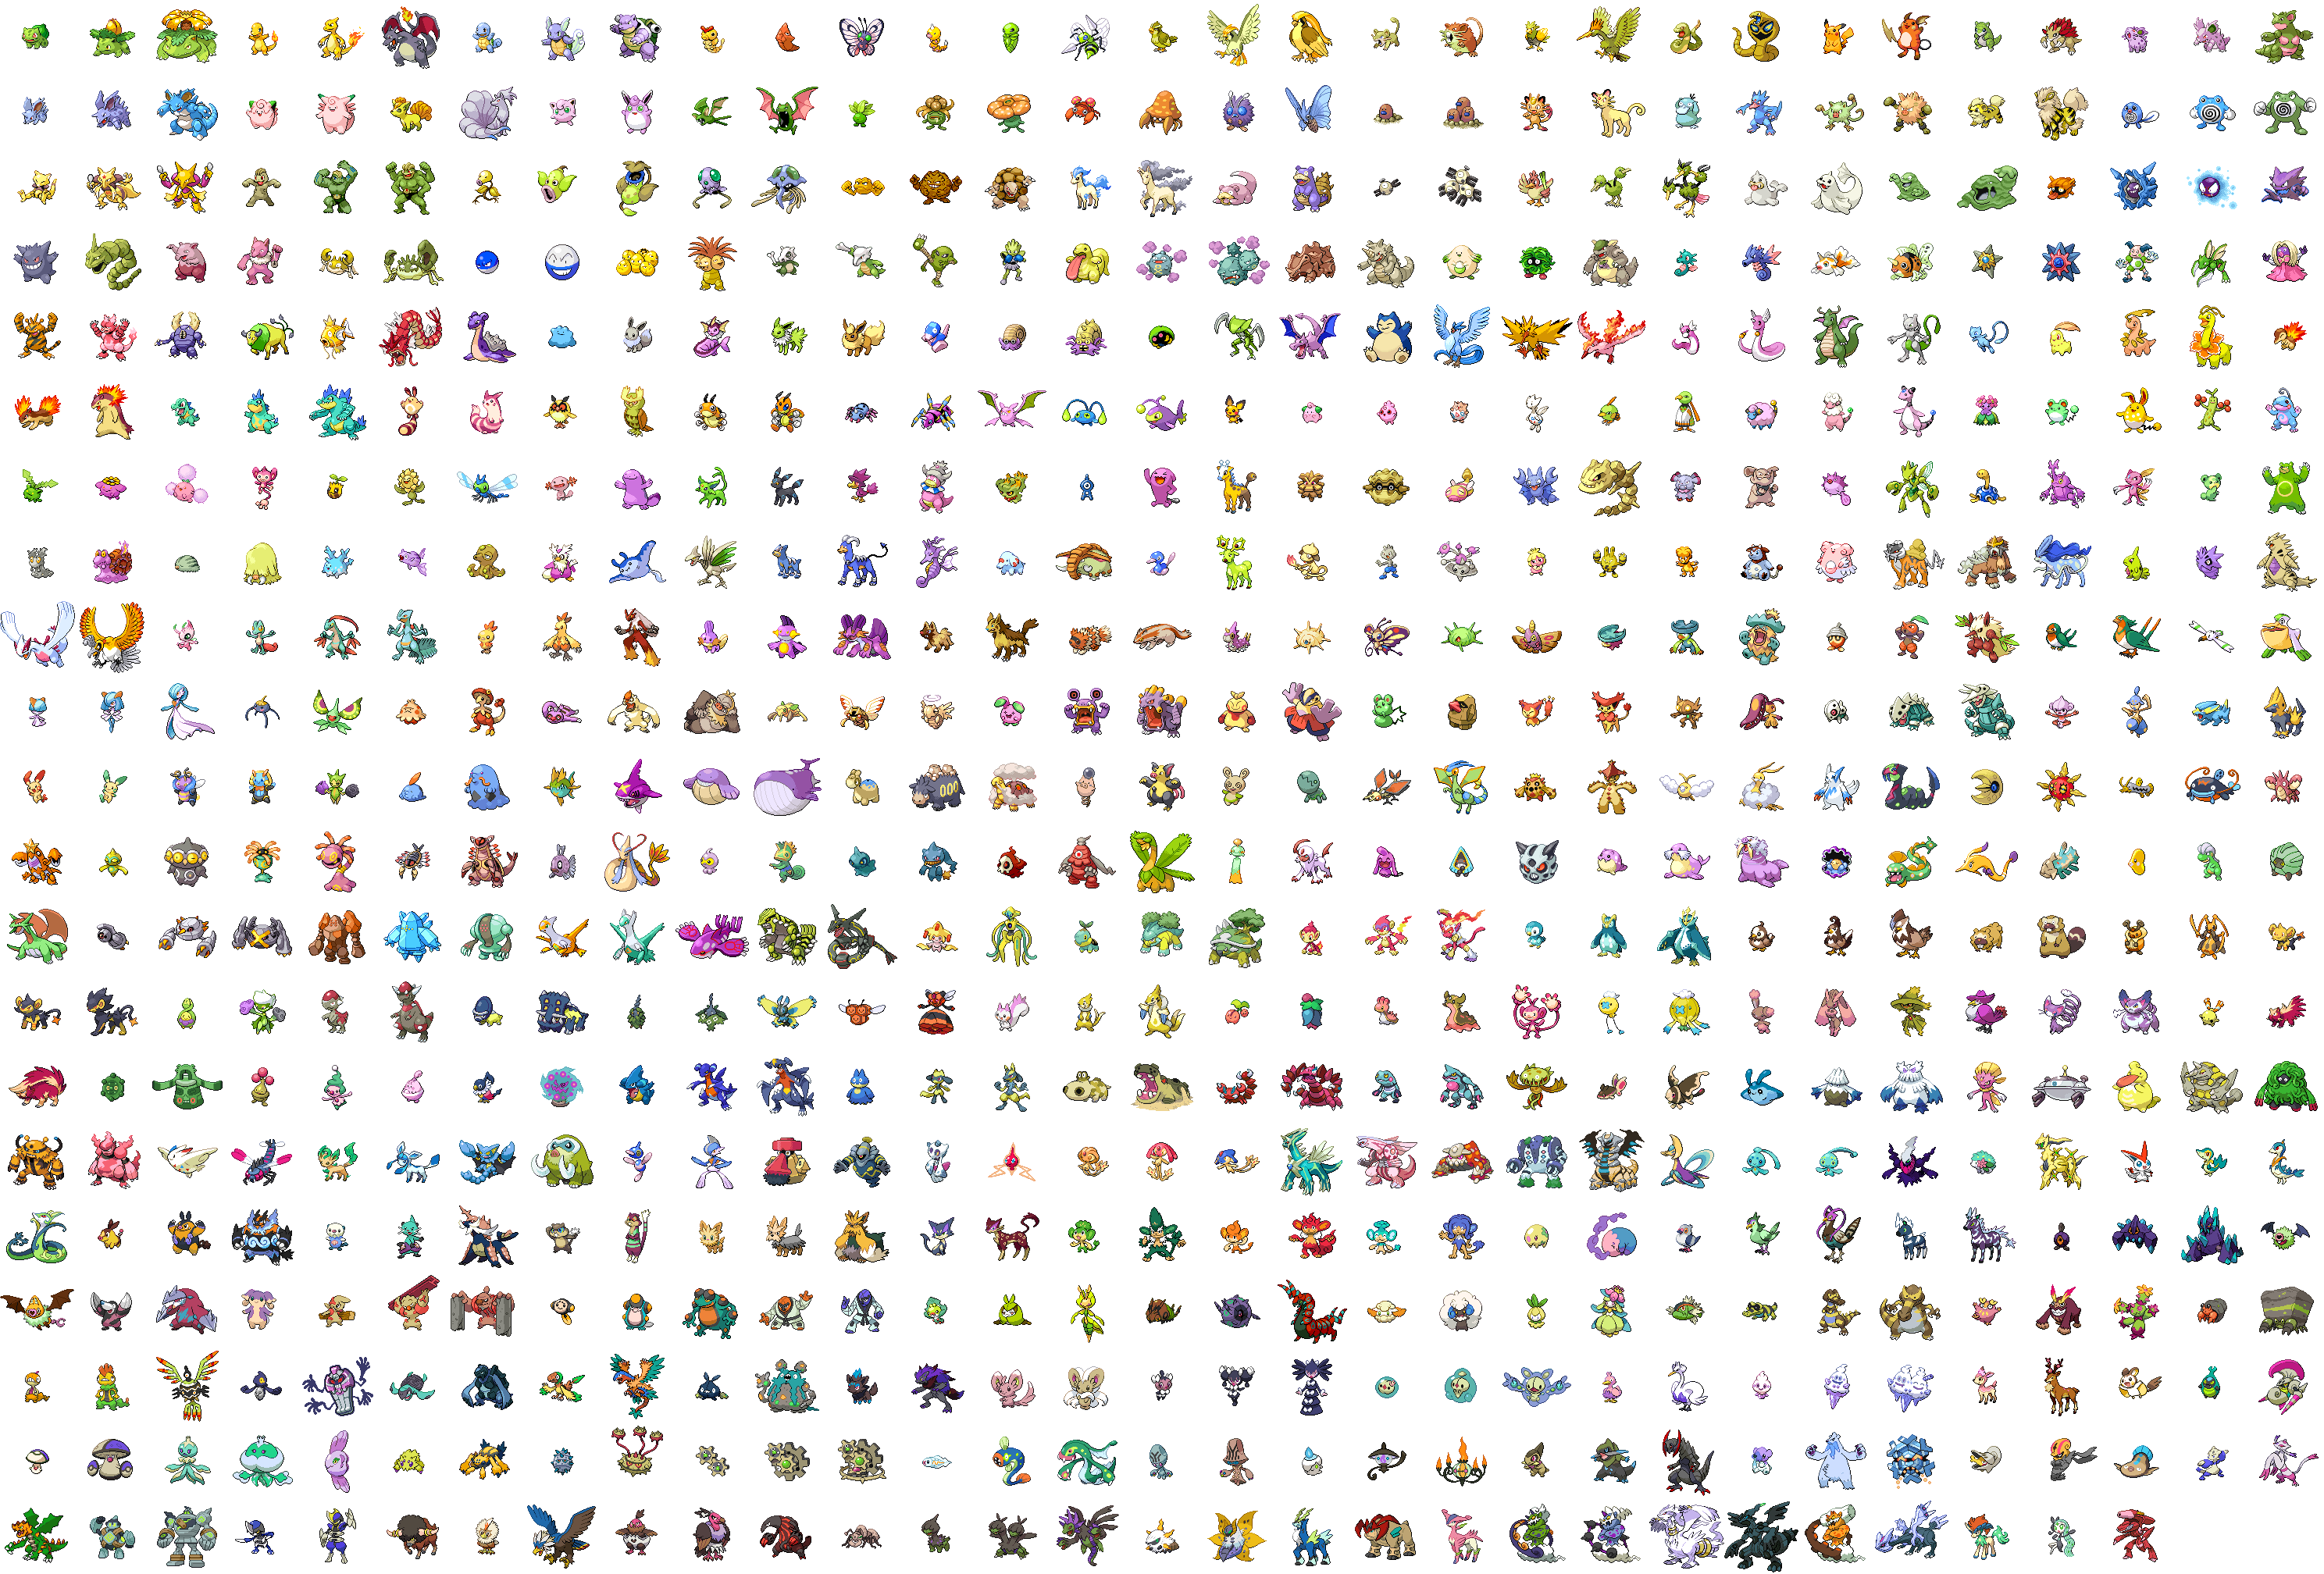 Sprite Database : Pokédex Images  Pokemon pokedex, Pokemon, 3ds pokemon